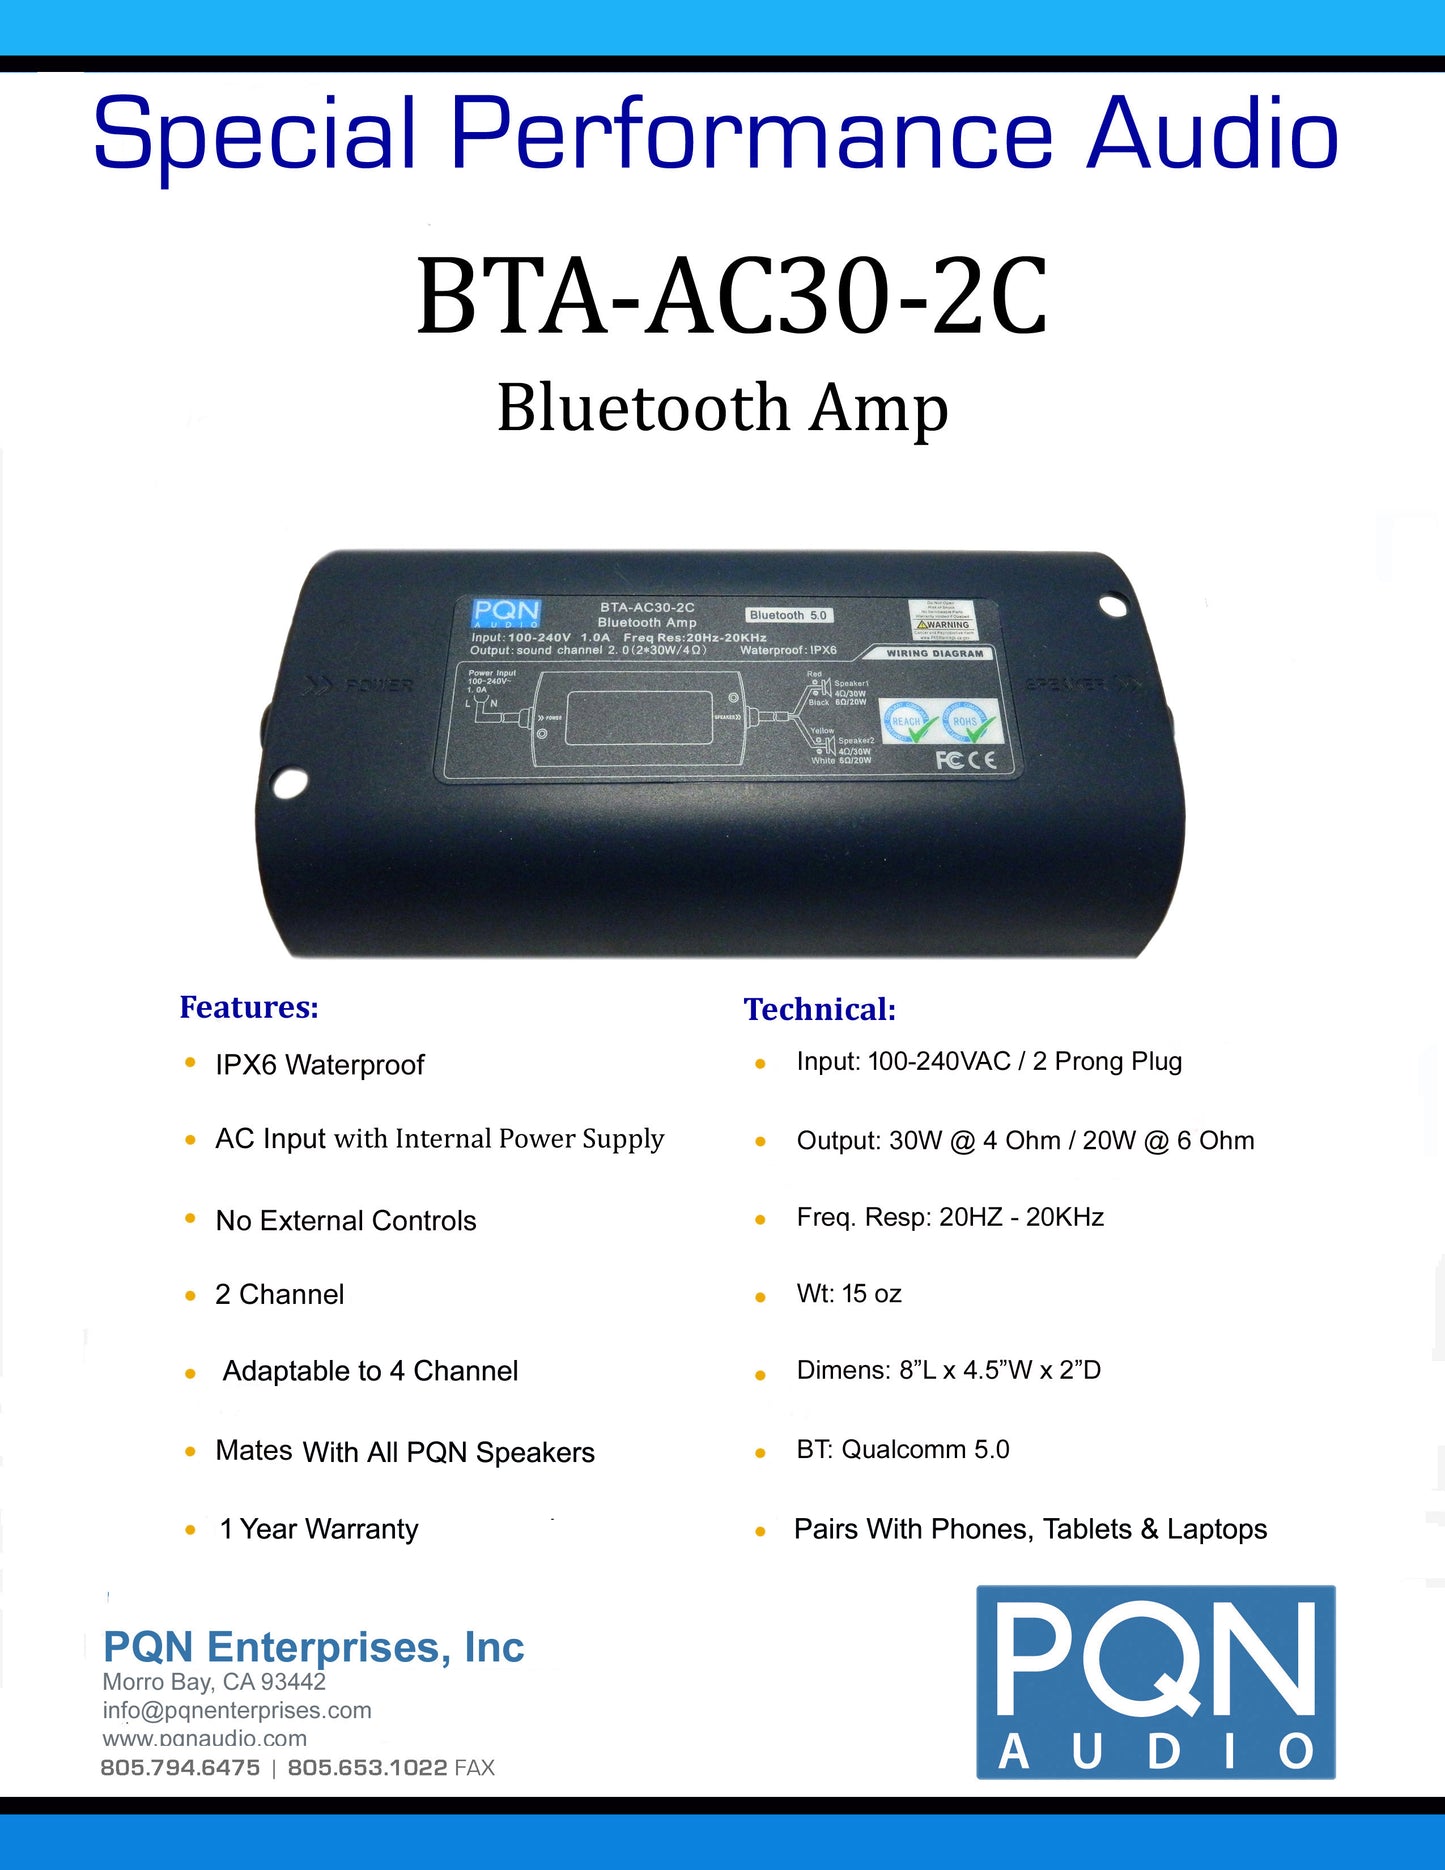 Bluetooth Amplifier full product description